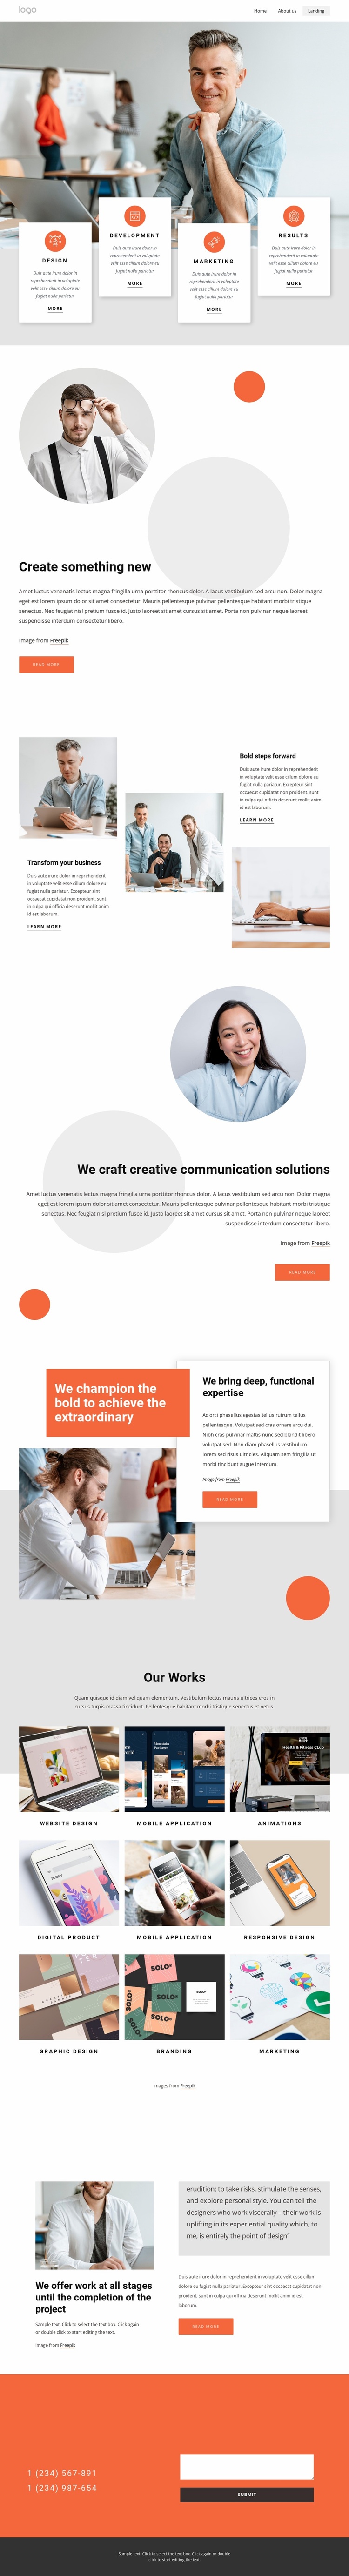 Crafting digital experiences: Website Design